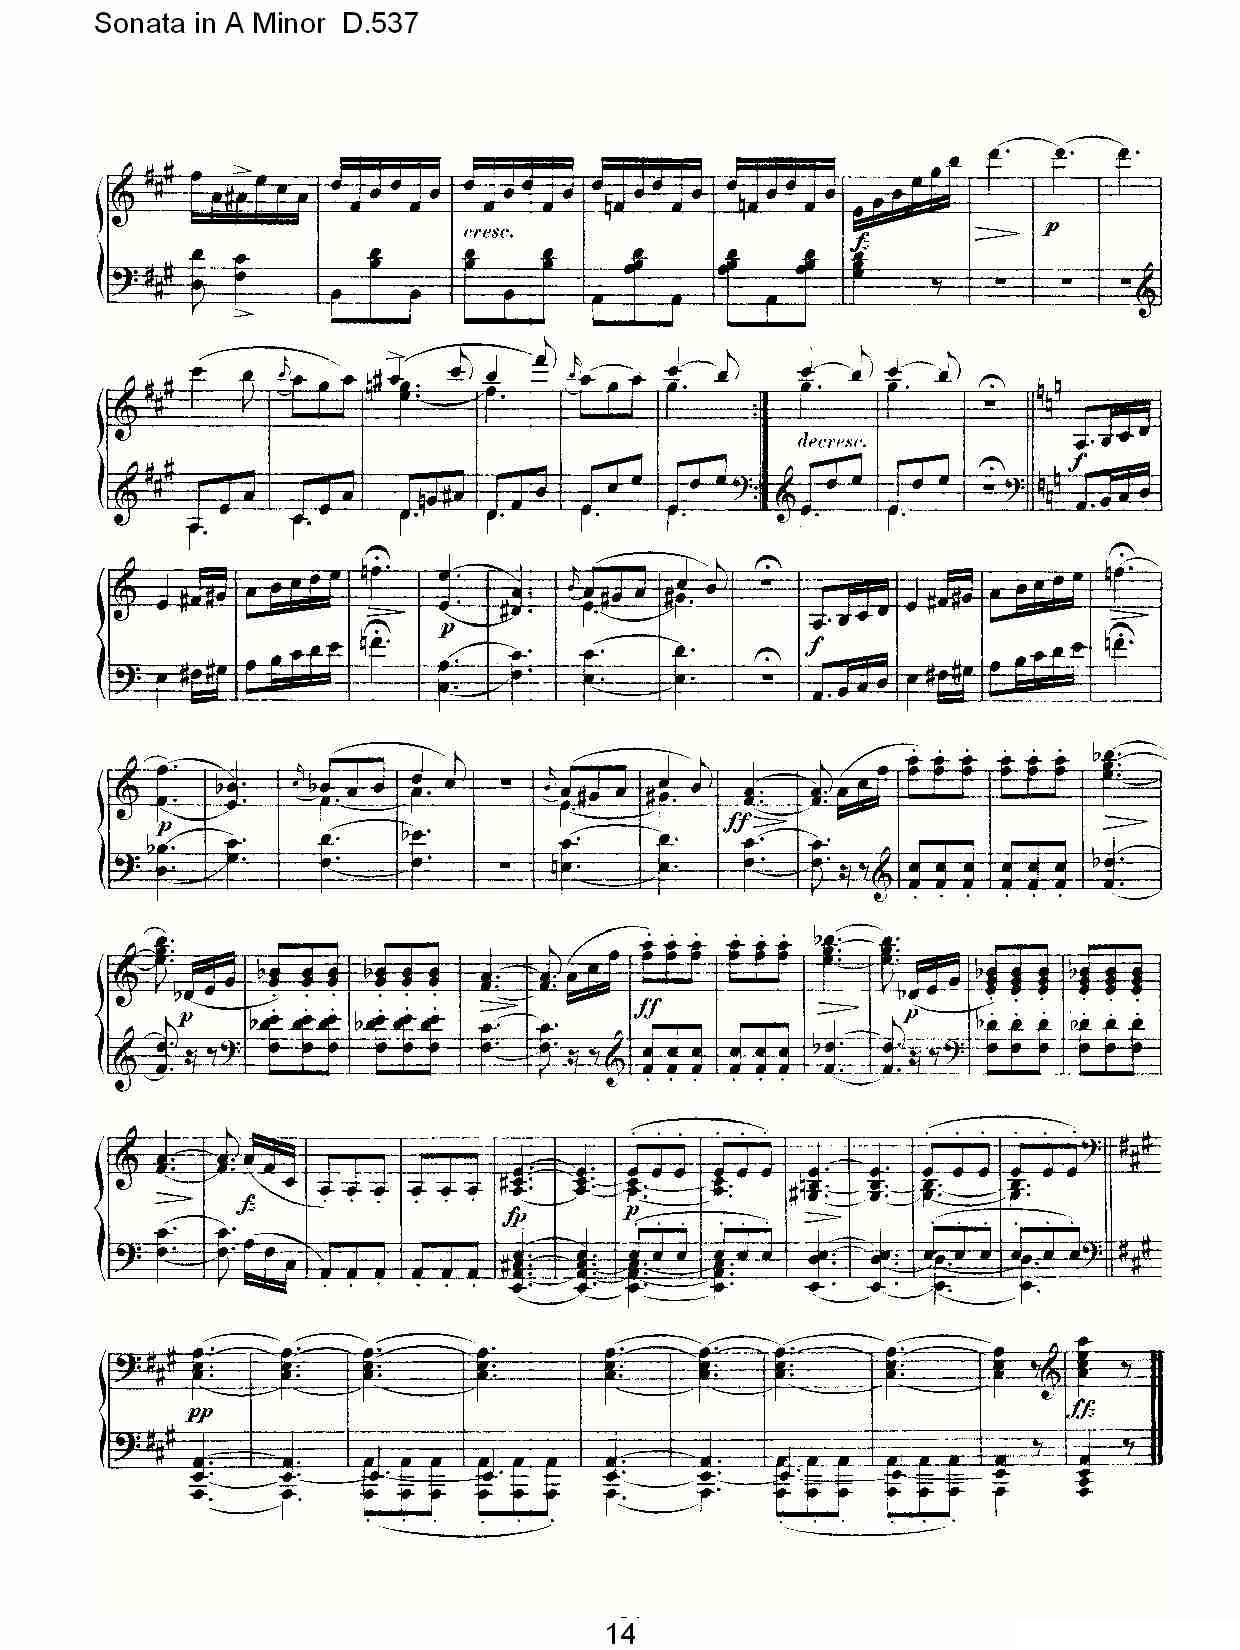 Sonata in A Minor D.537（A小调奏鸣曲 D.537）钢琴曲谱（图14）